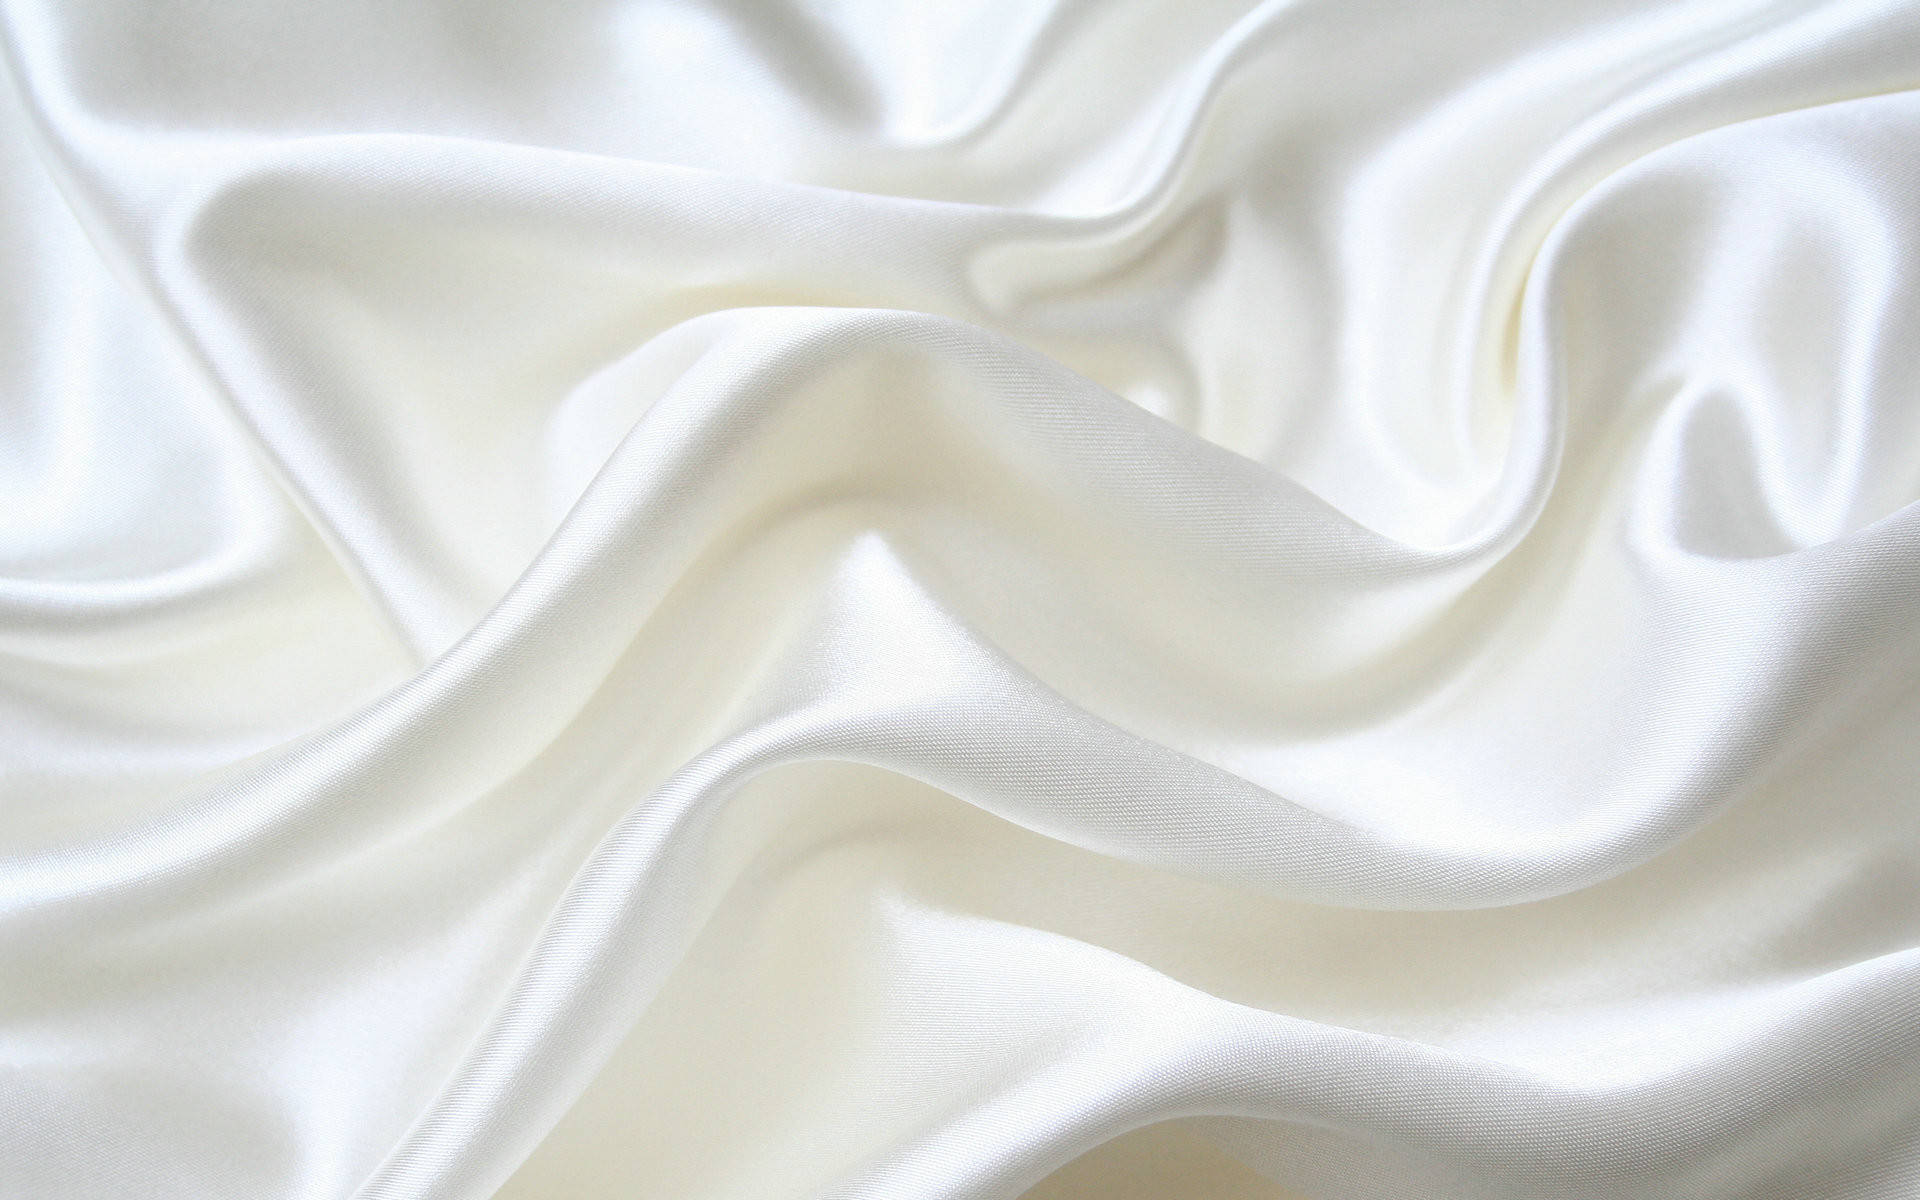 Smooth White Silk Wallpaper